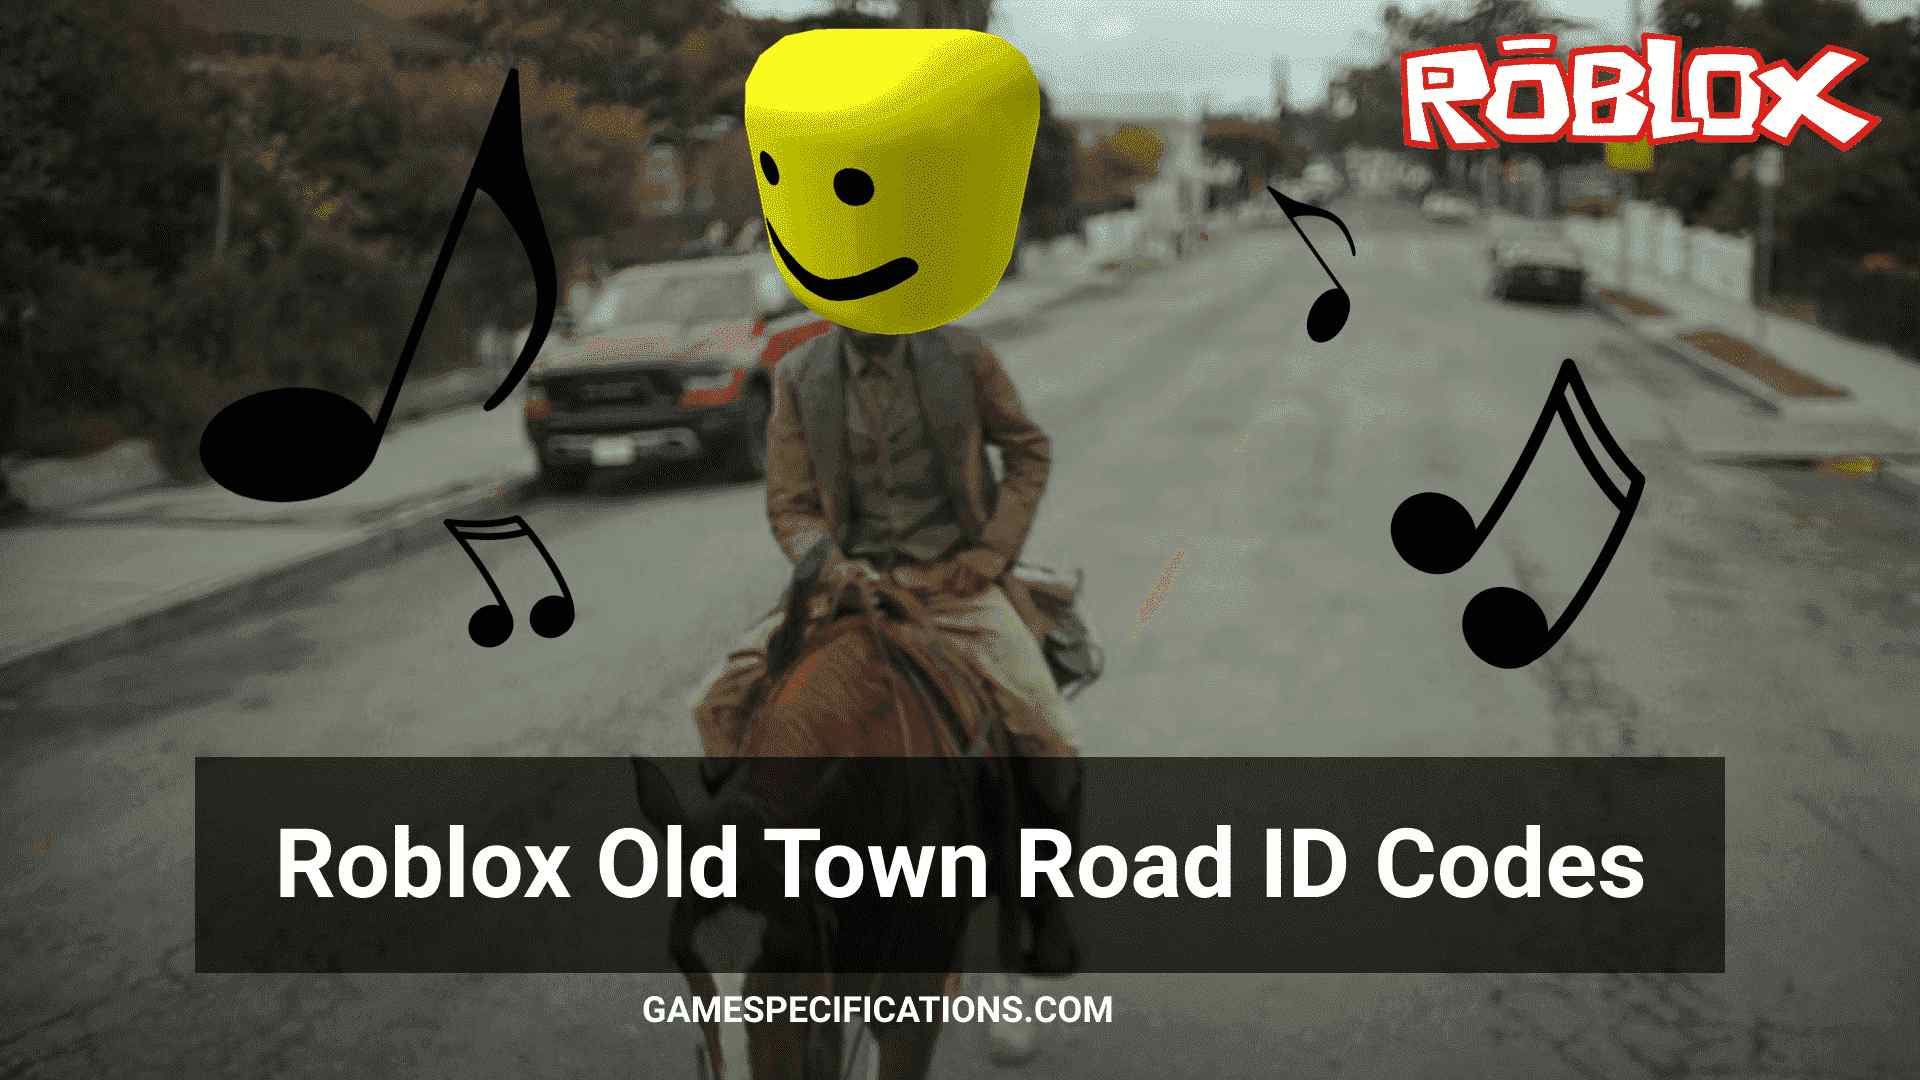 Ohtbreqjb6zwm - old town roblox oof remix